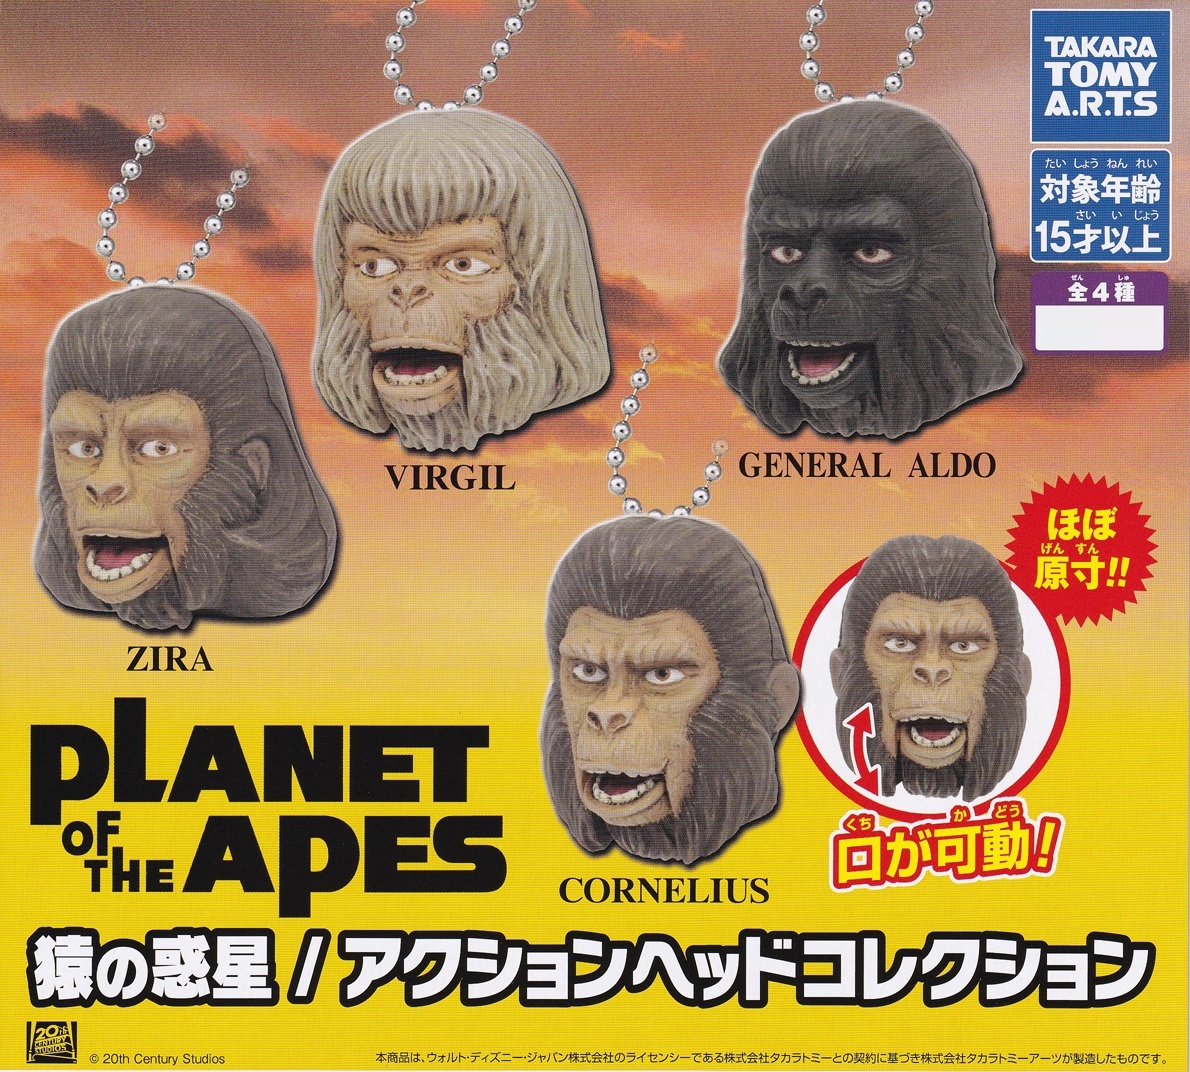  Planet of the Apes action head коллекция все 4 вида комплект PLANET OF THE APES фигурка CORNELIUS ZIRA VIRGIL GENERAL ALDO